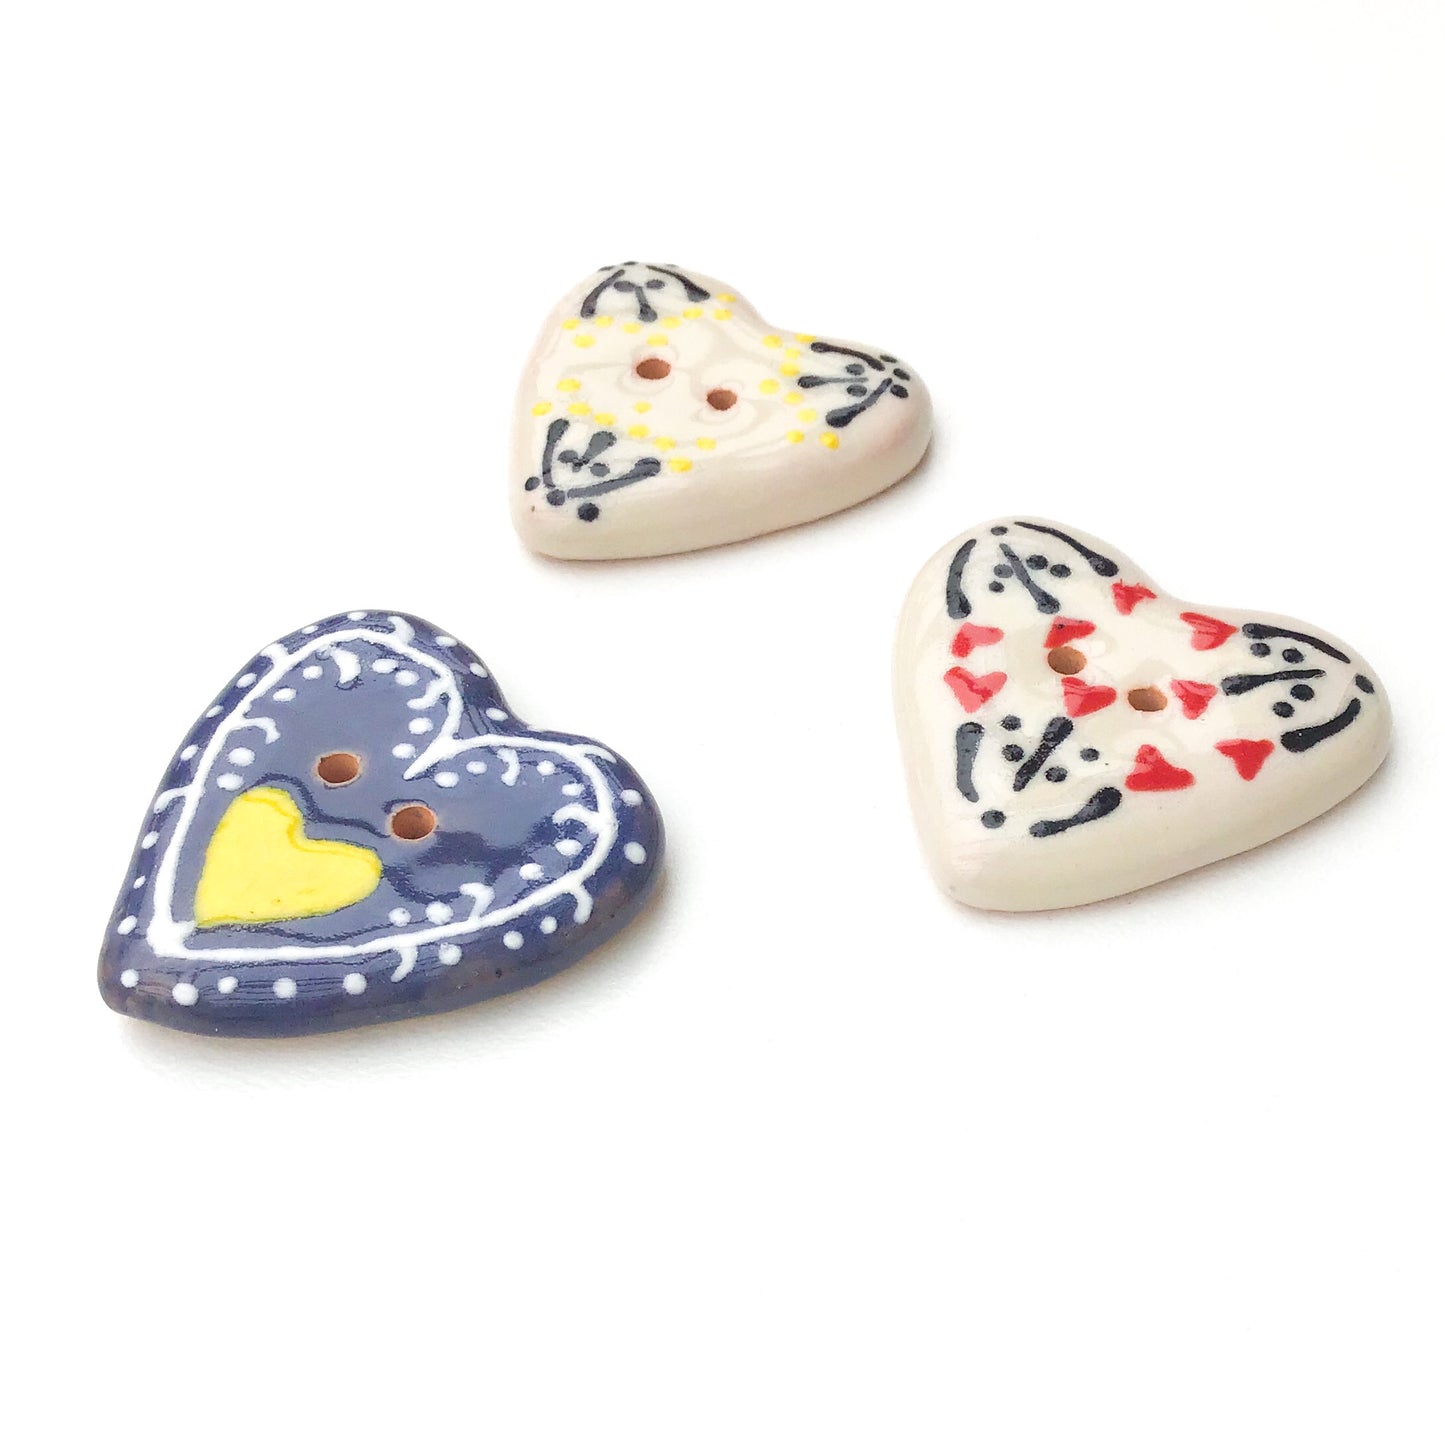 Decorative Ceramic Heart Buttons - Pottery Heart Buttons - 1 1/4"